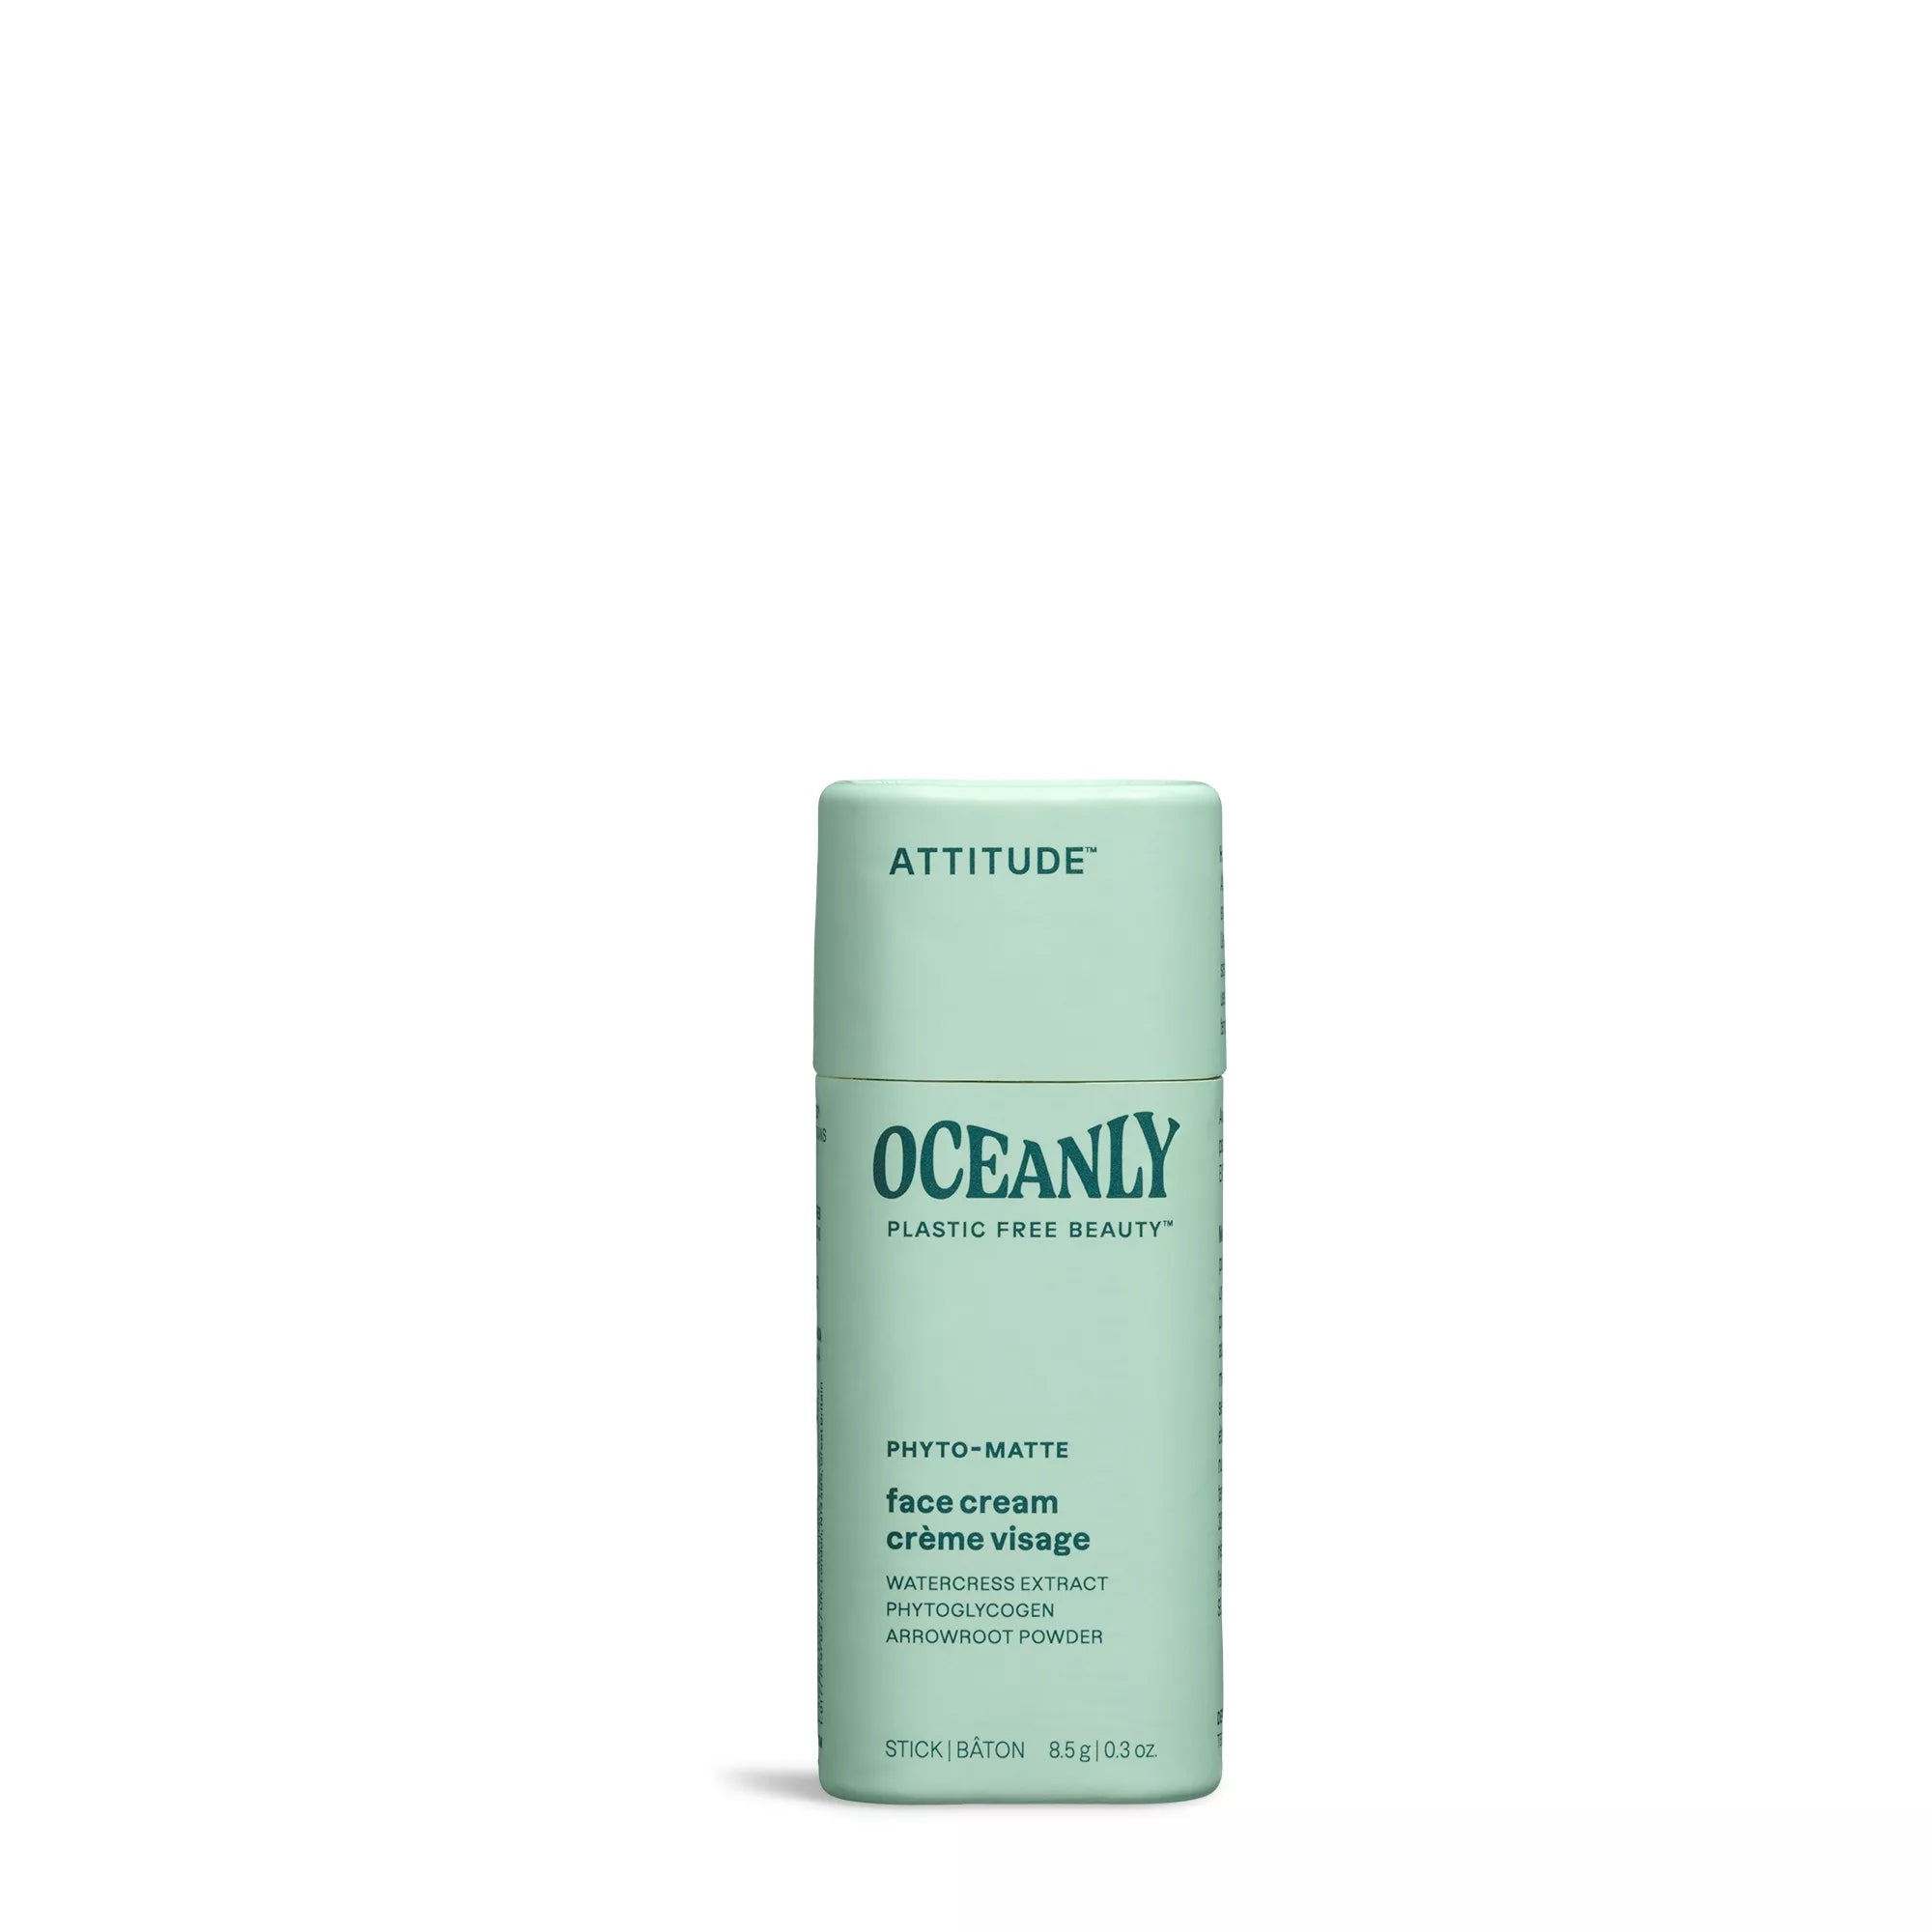 ATTITUDE Oceanly Phyto-Matte Mini Face Cream Unscented 8.5g 16080_en? Unscented 8.5g